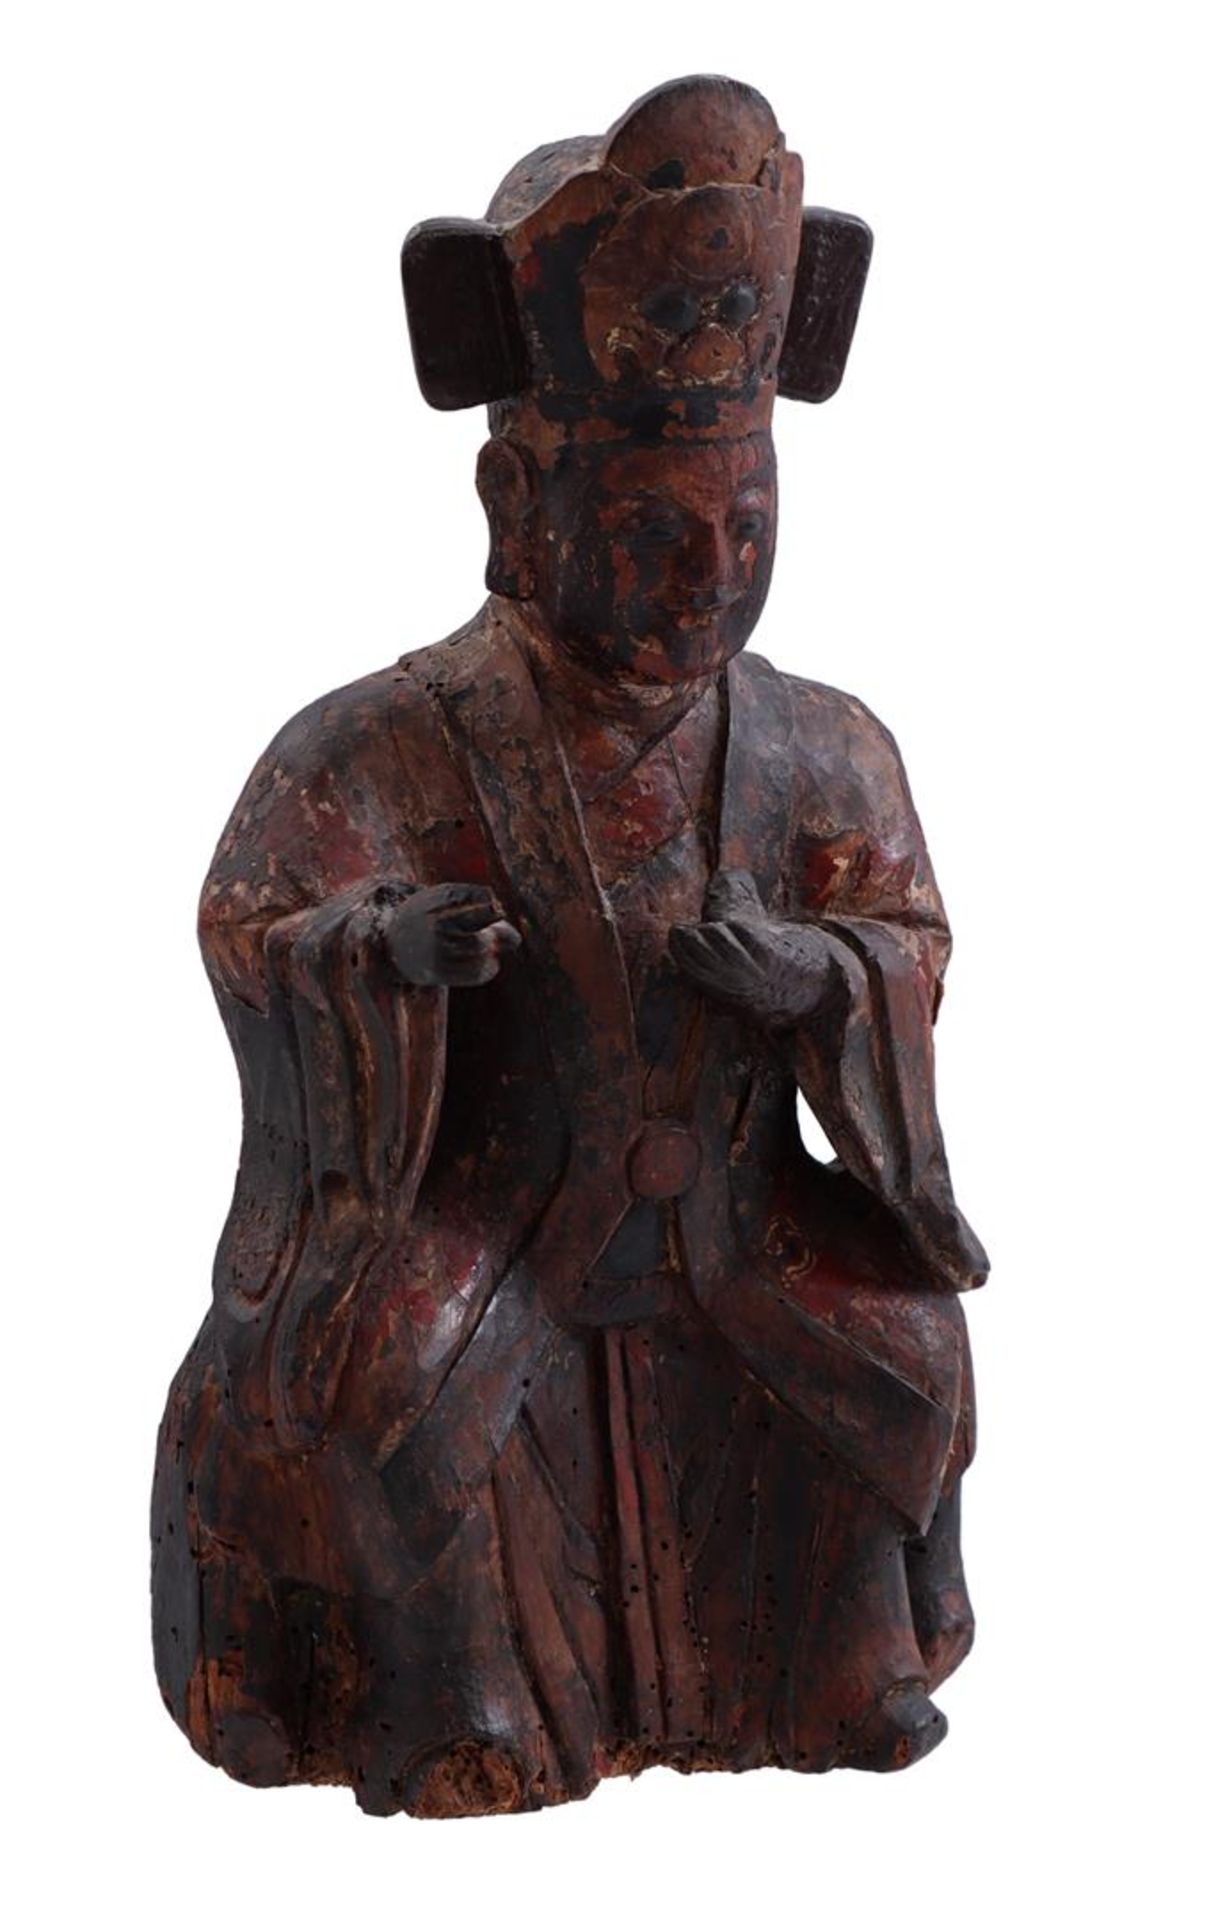 Wooden sculpture of a philosopher